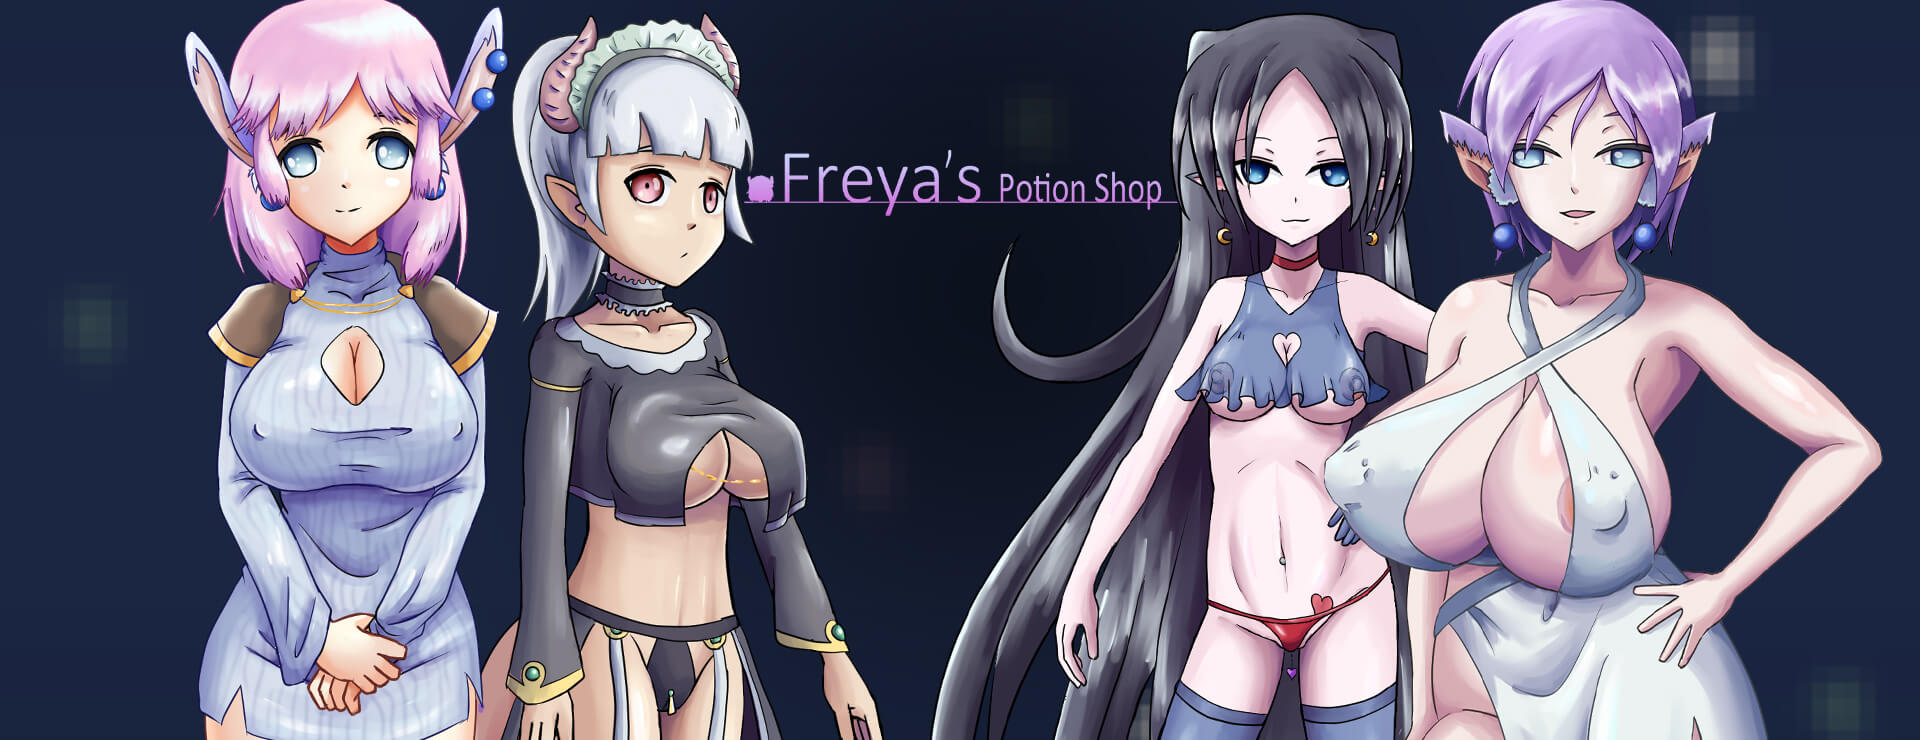 Freya's Potion Shop - Action Adventure Game